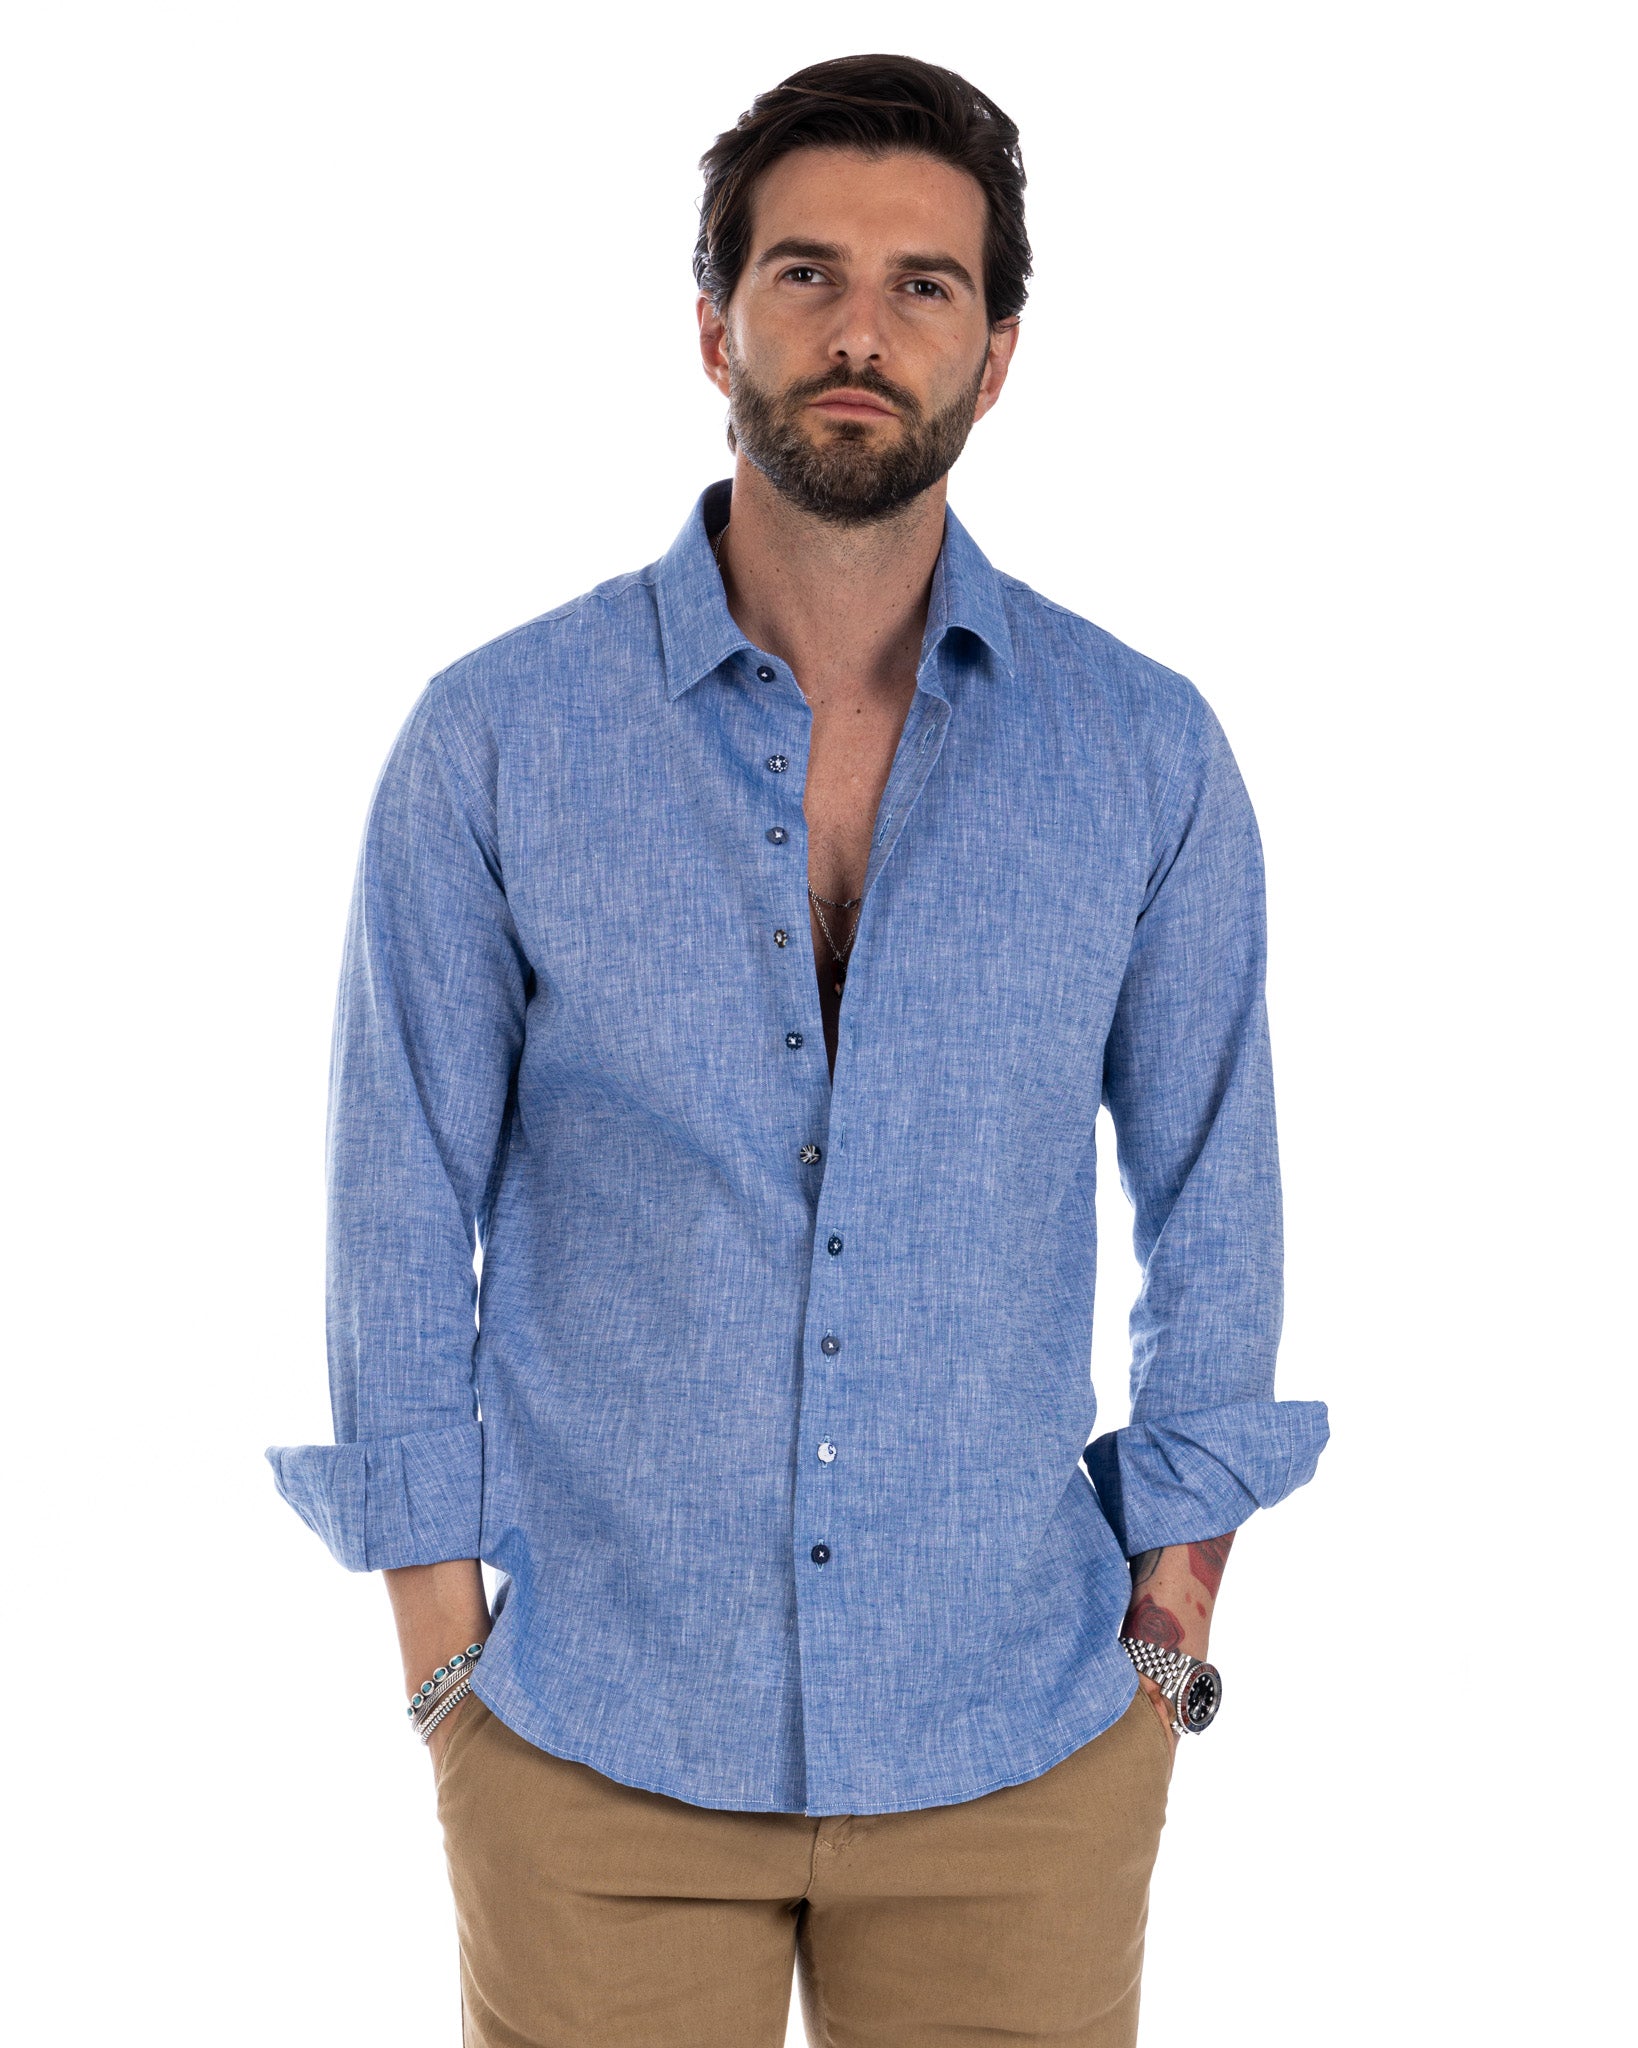 Praiano - French denim linen shirt